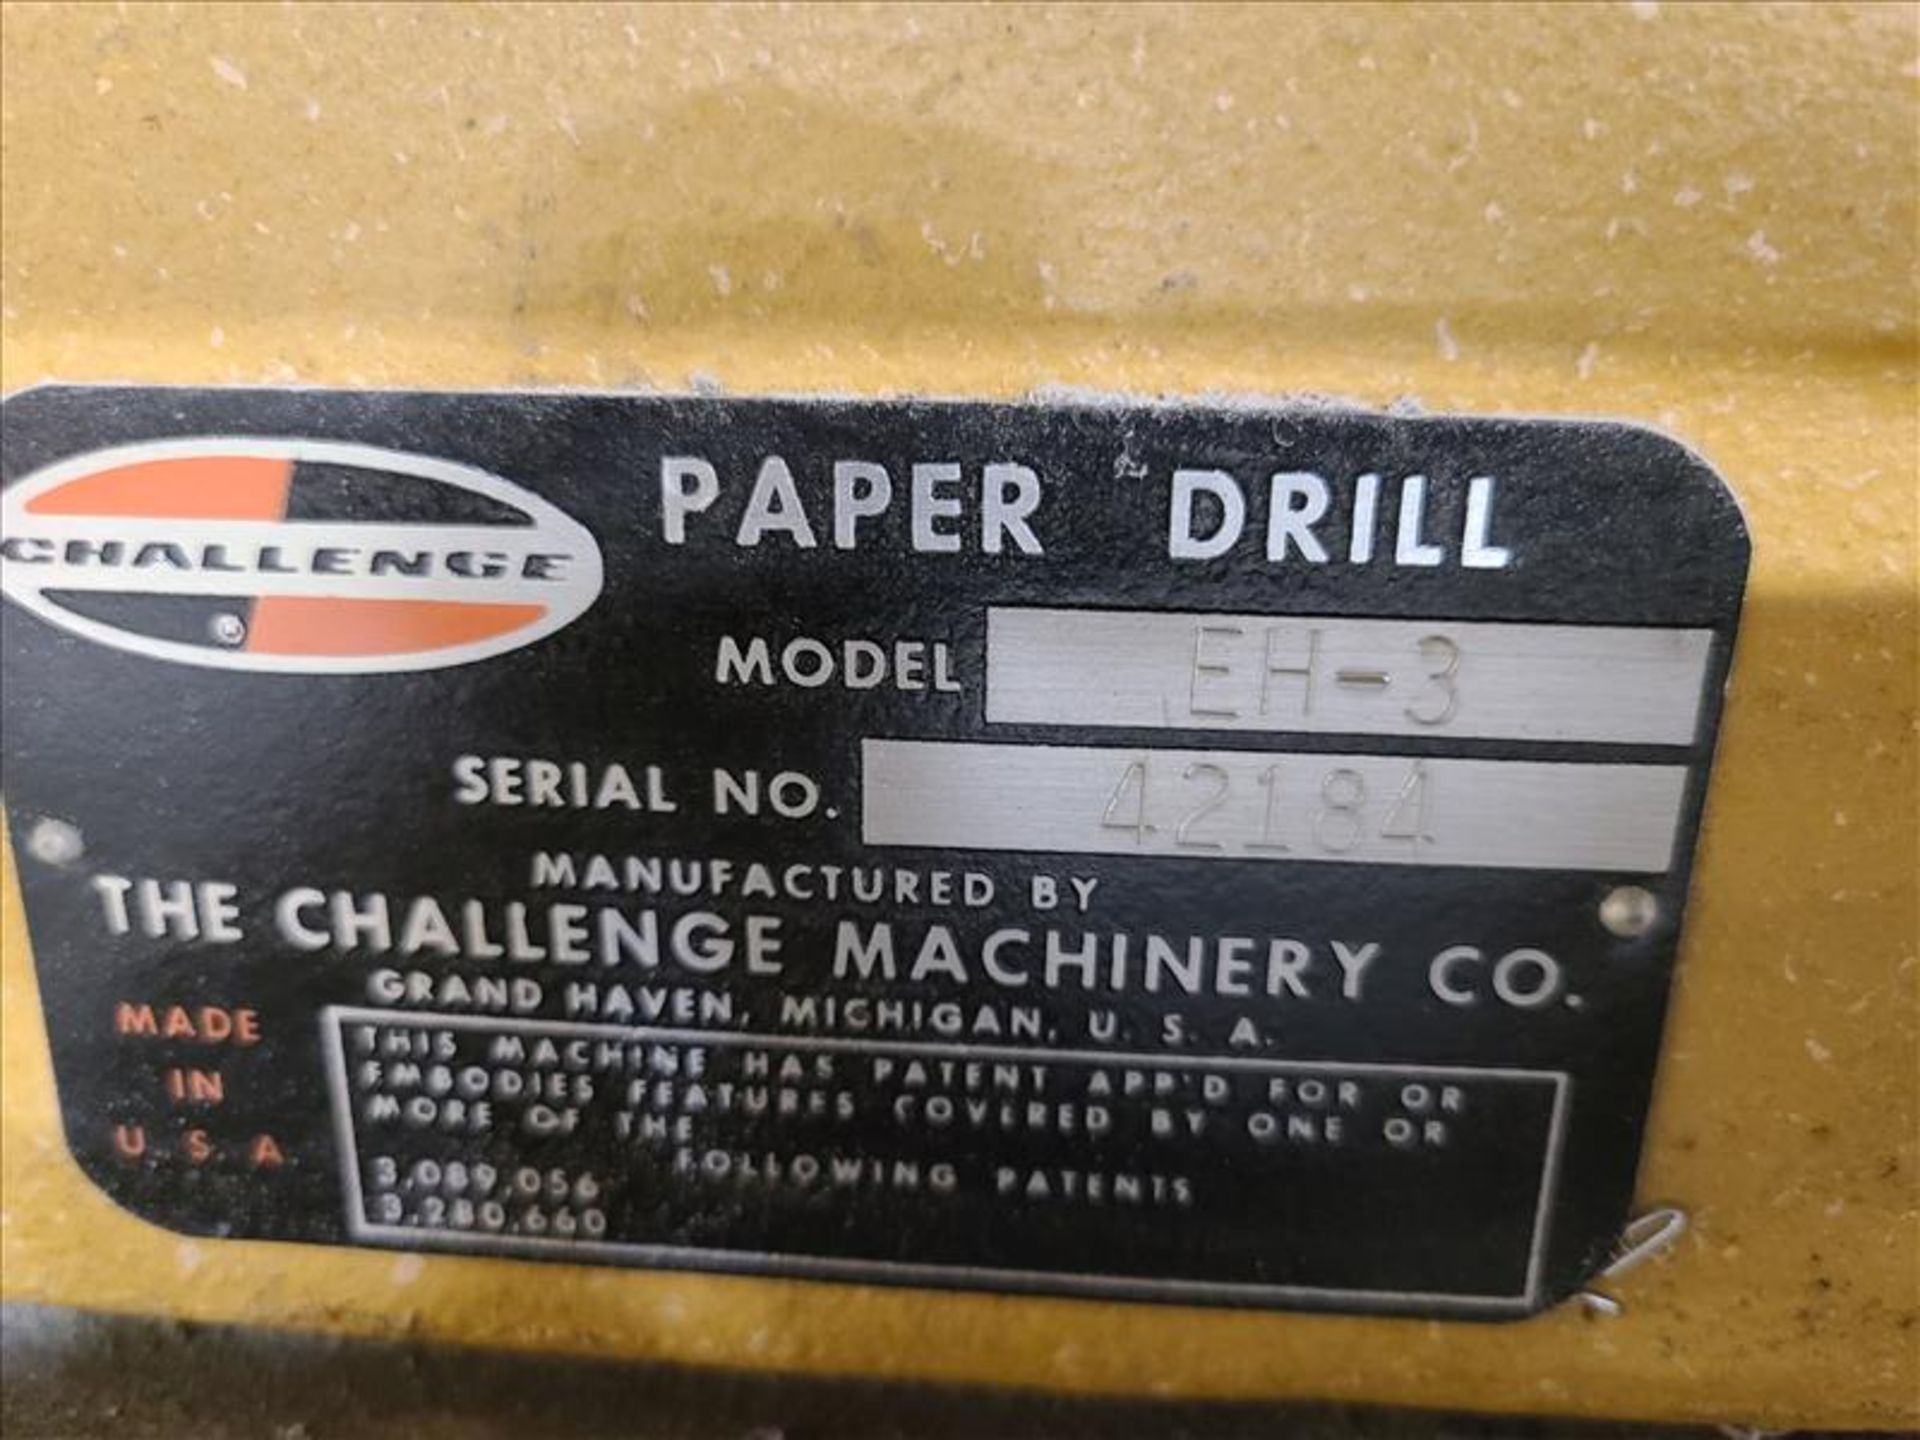 Challenge Paper Drill, model EH-3, S/N.42184, 230V, 17 amps, 1 Phase, 60 Hz - Image 3 of 4